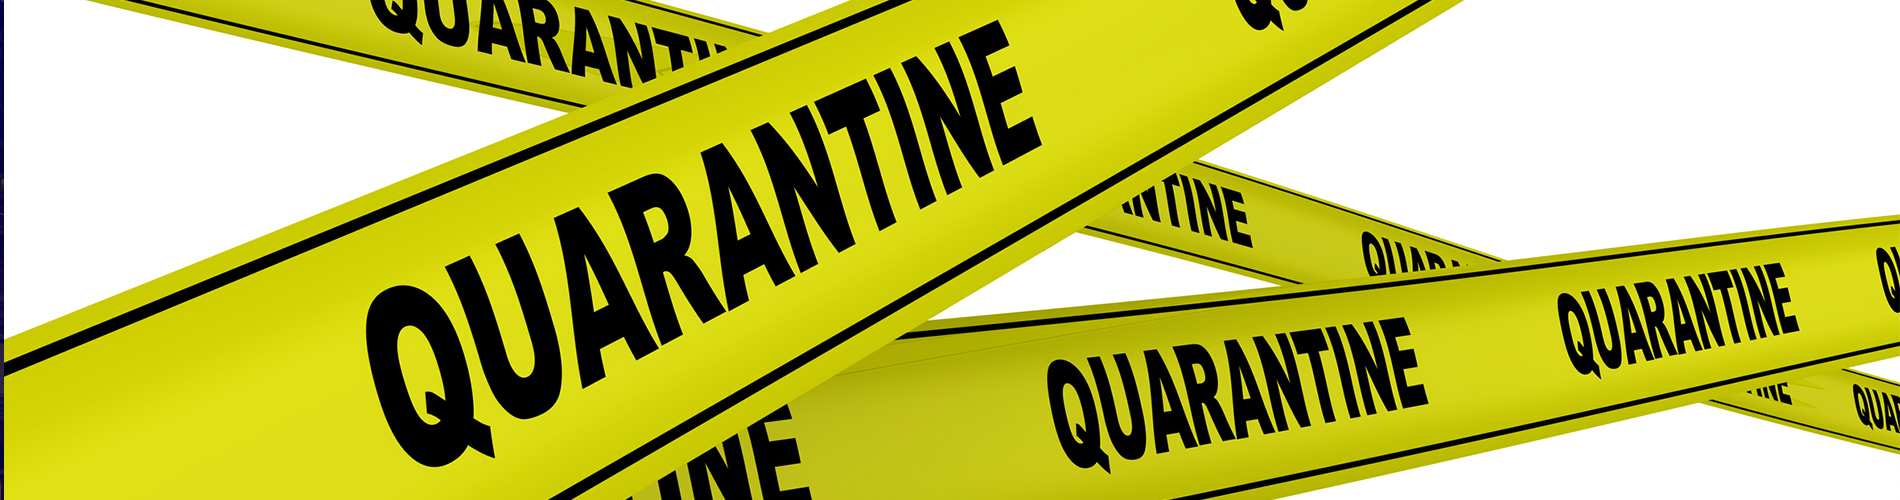 quarantine-banner-image-1900-x-500